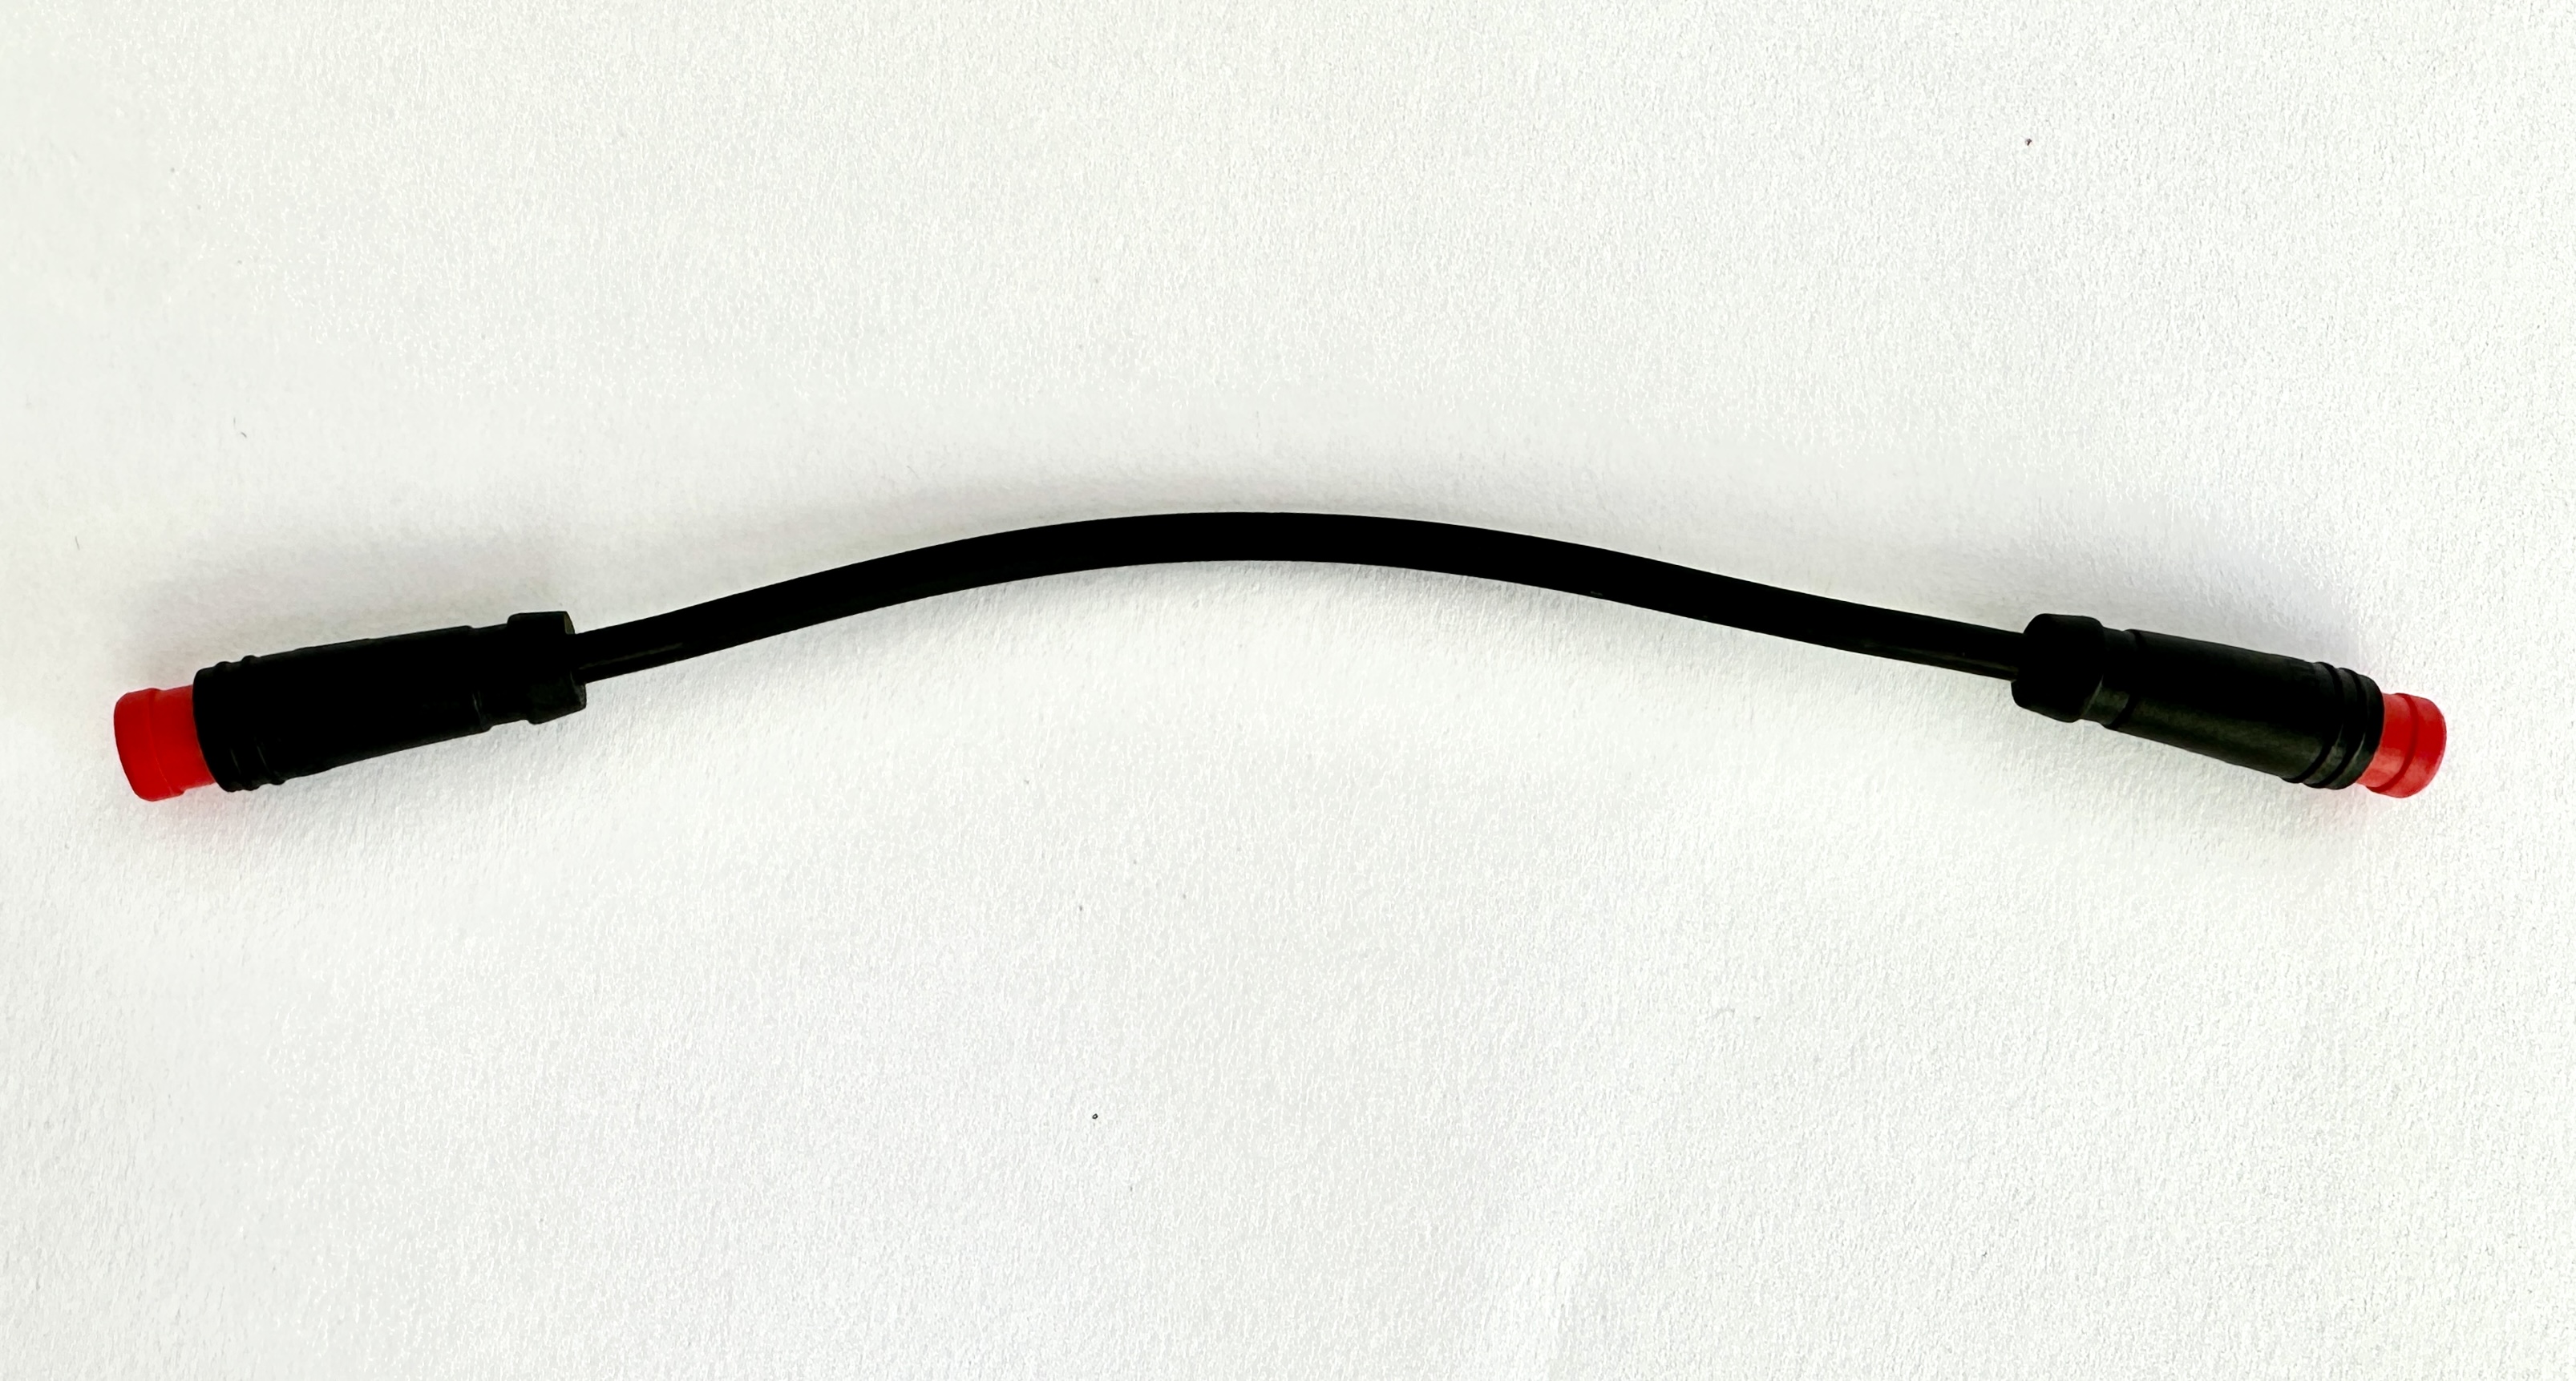 HIGO / Julet cavo adattatore 11 cm per ebike, 2 PIN maschio a maschio, rosso